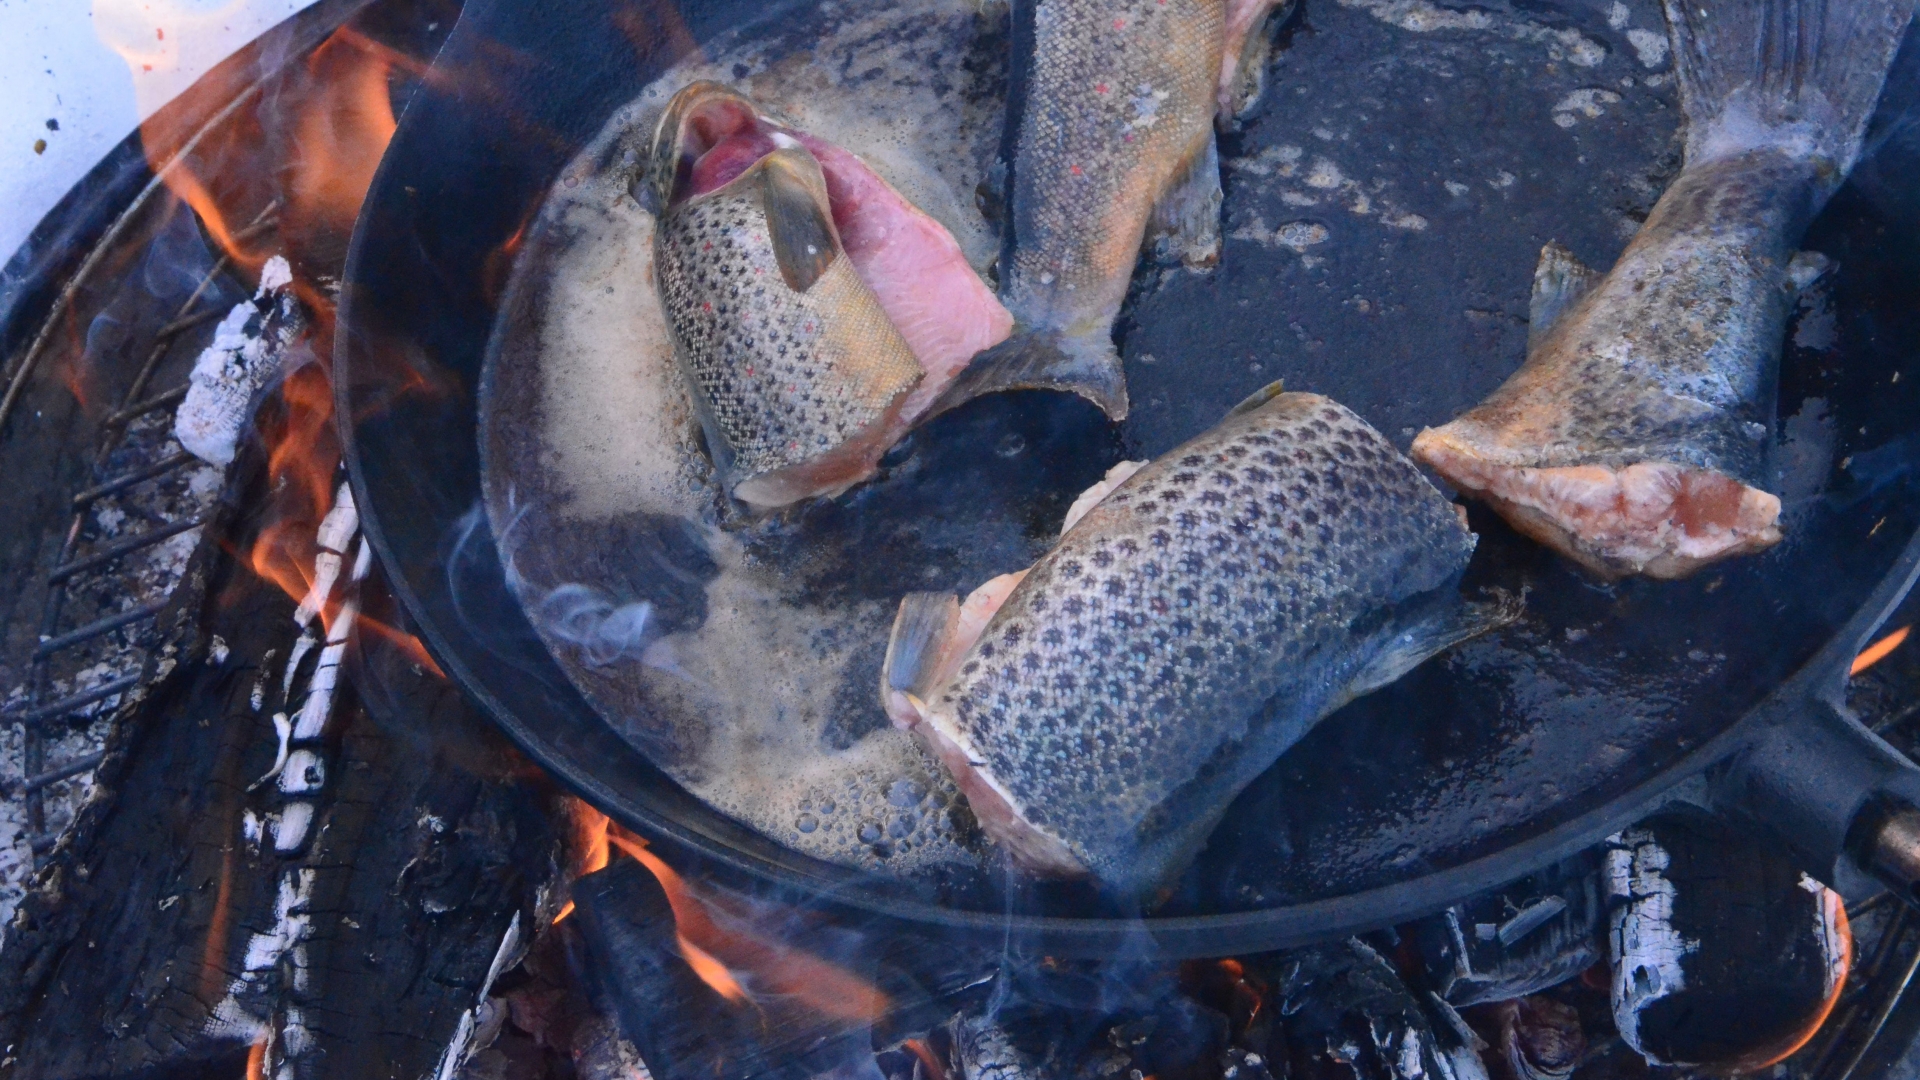 Frying fresh fish on the bonfire